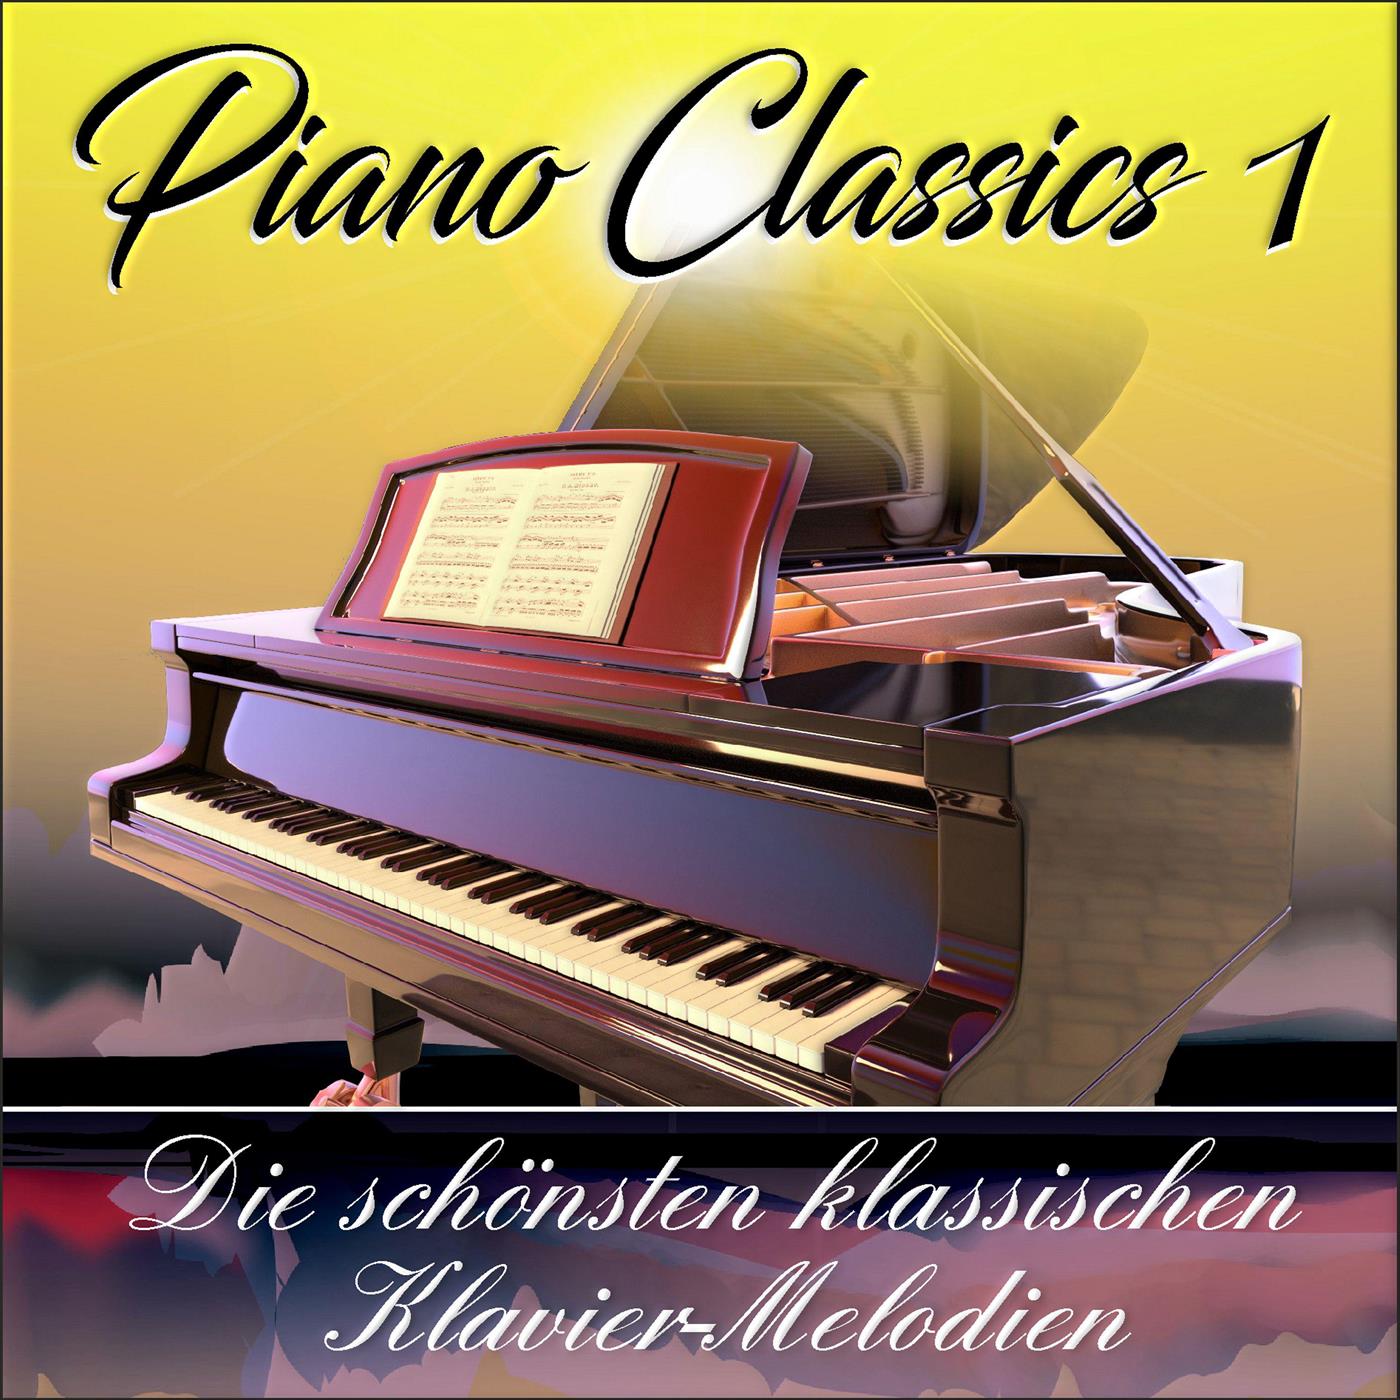 Piano Classics 1, die sch nsten klassischen KlavierMelodien